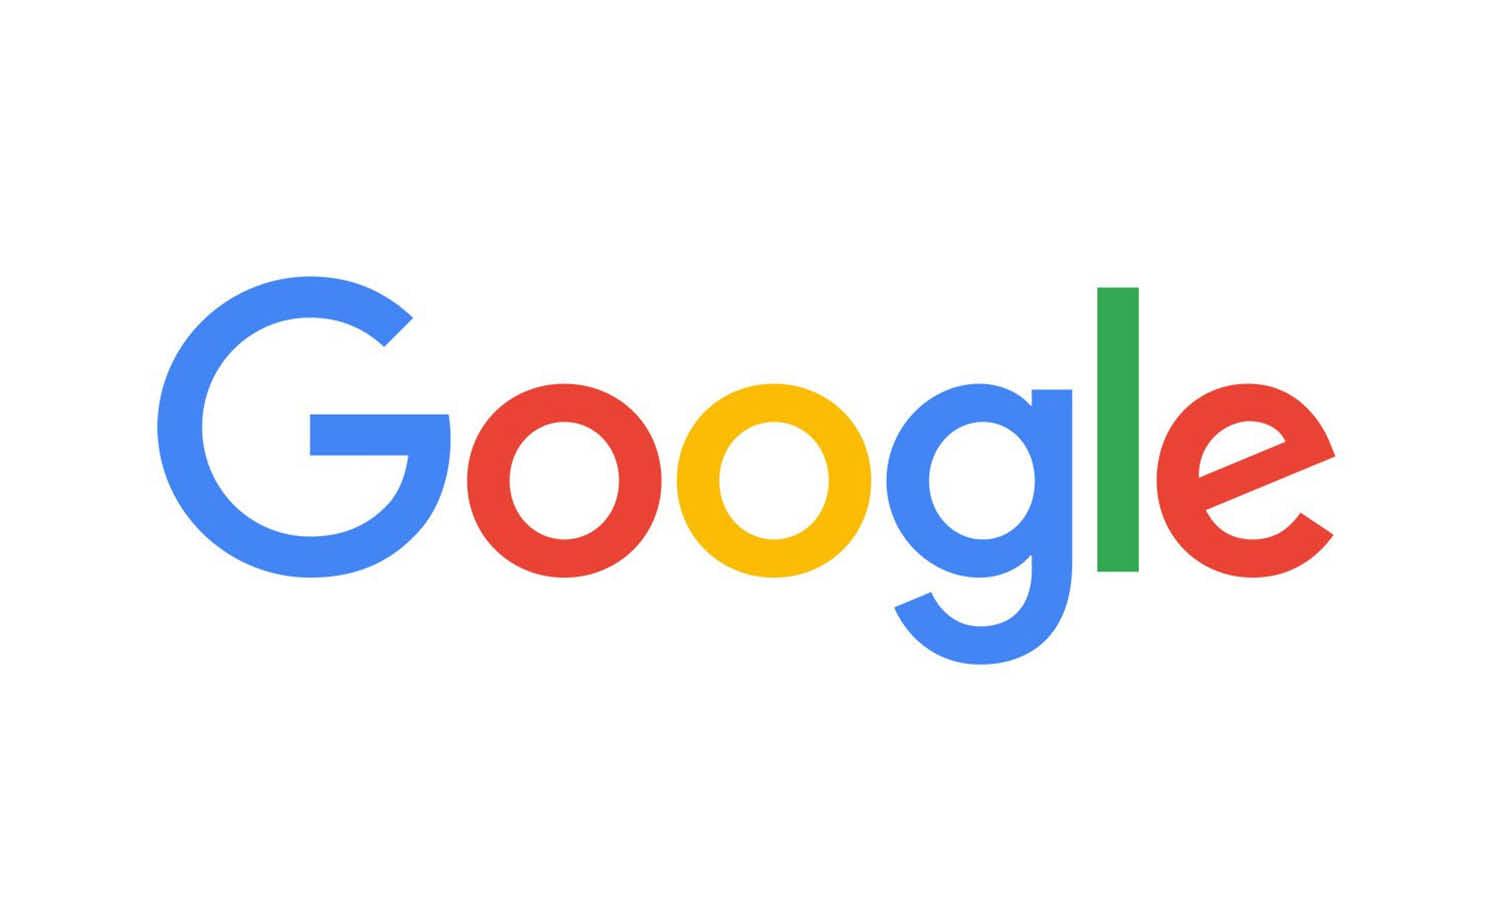 Google Logo Design: History & Evolution - Kreafolk